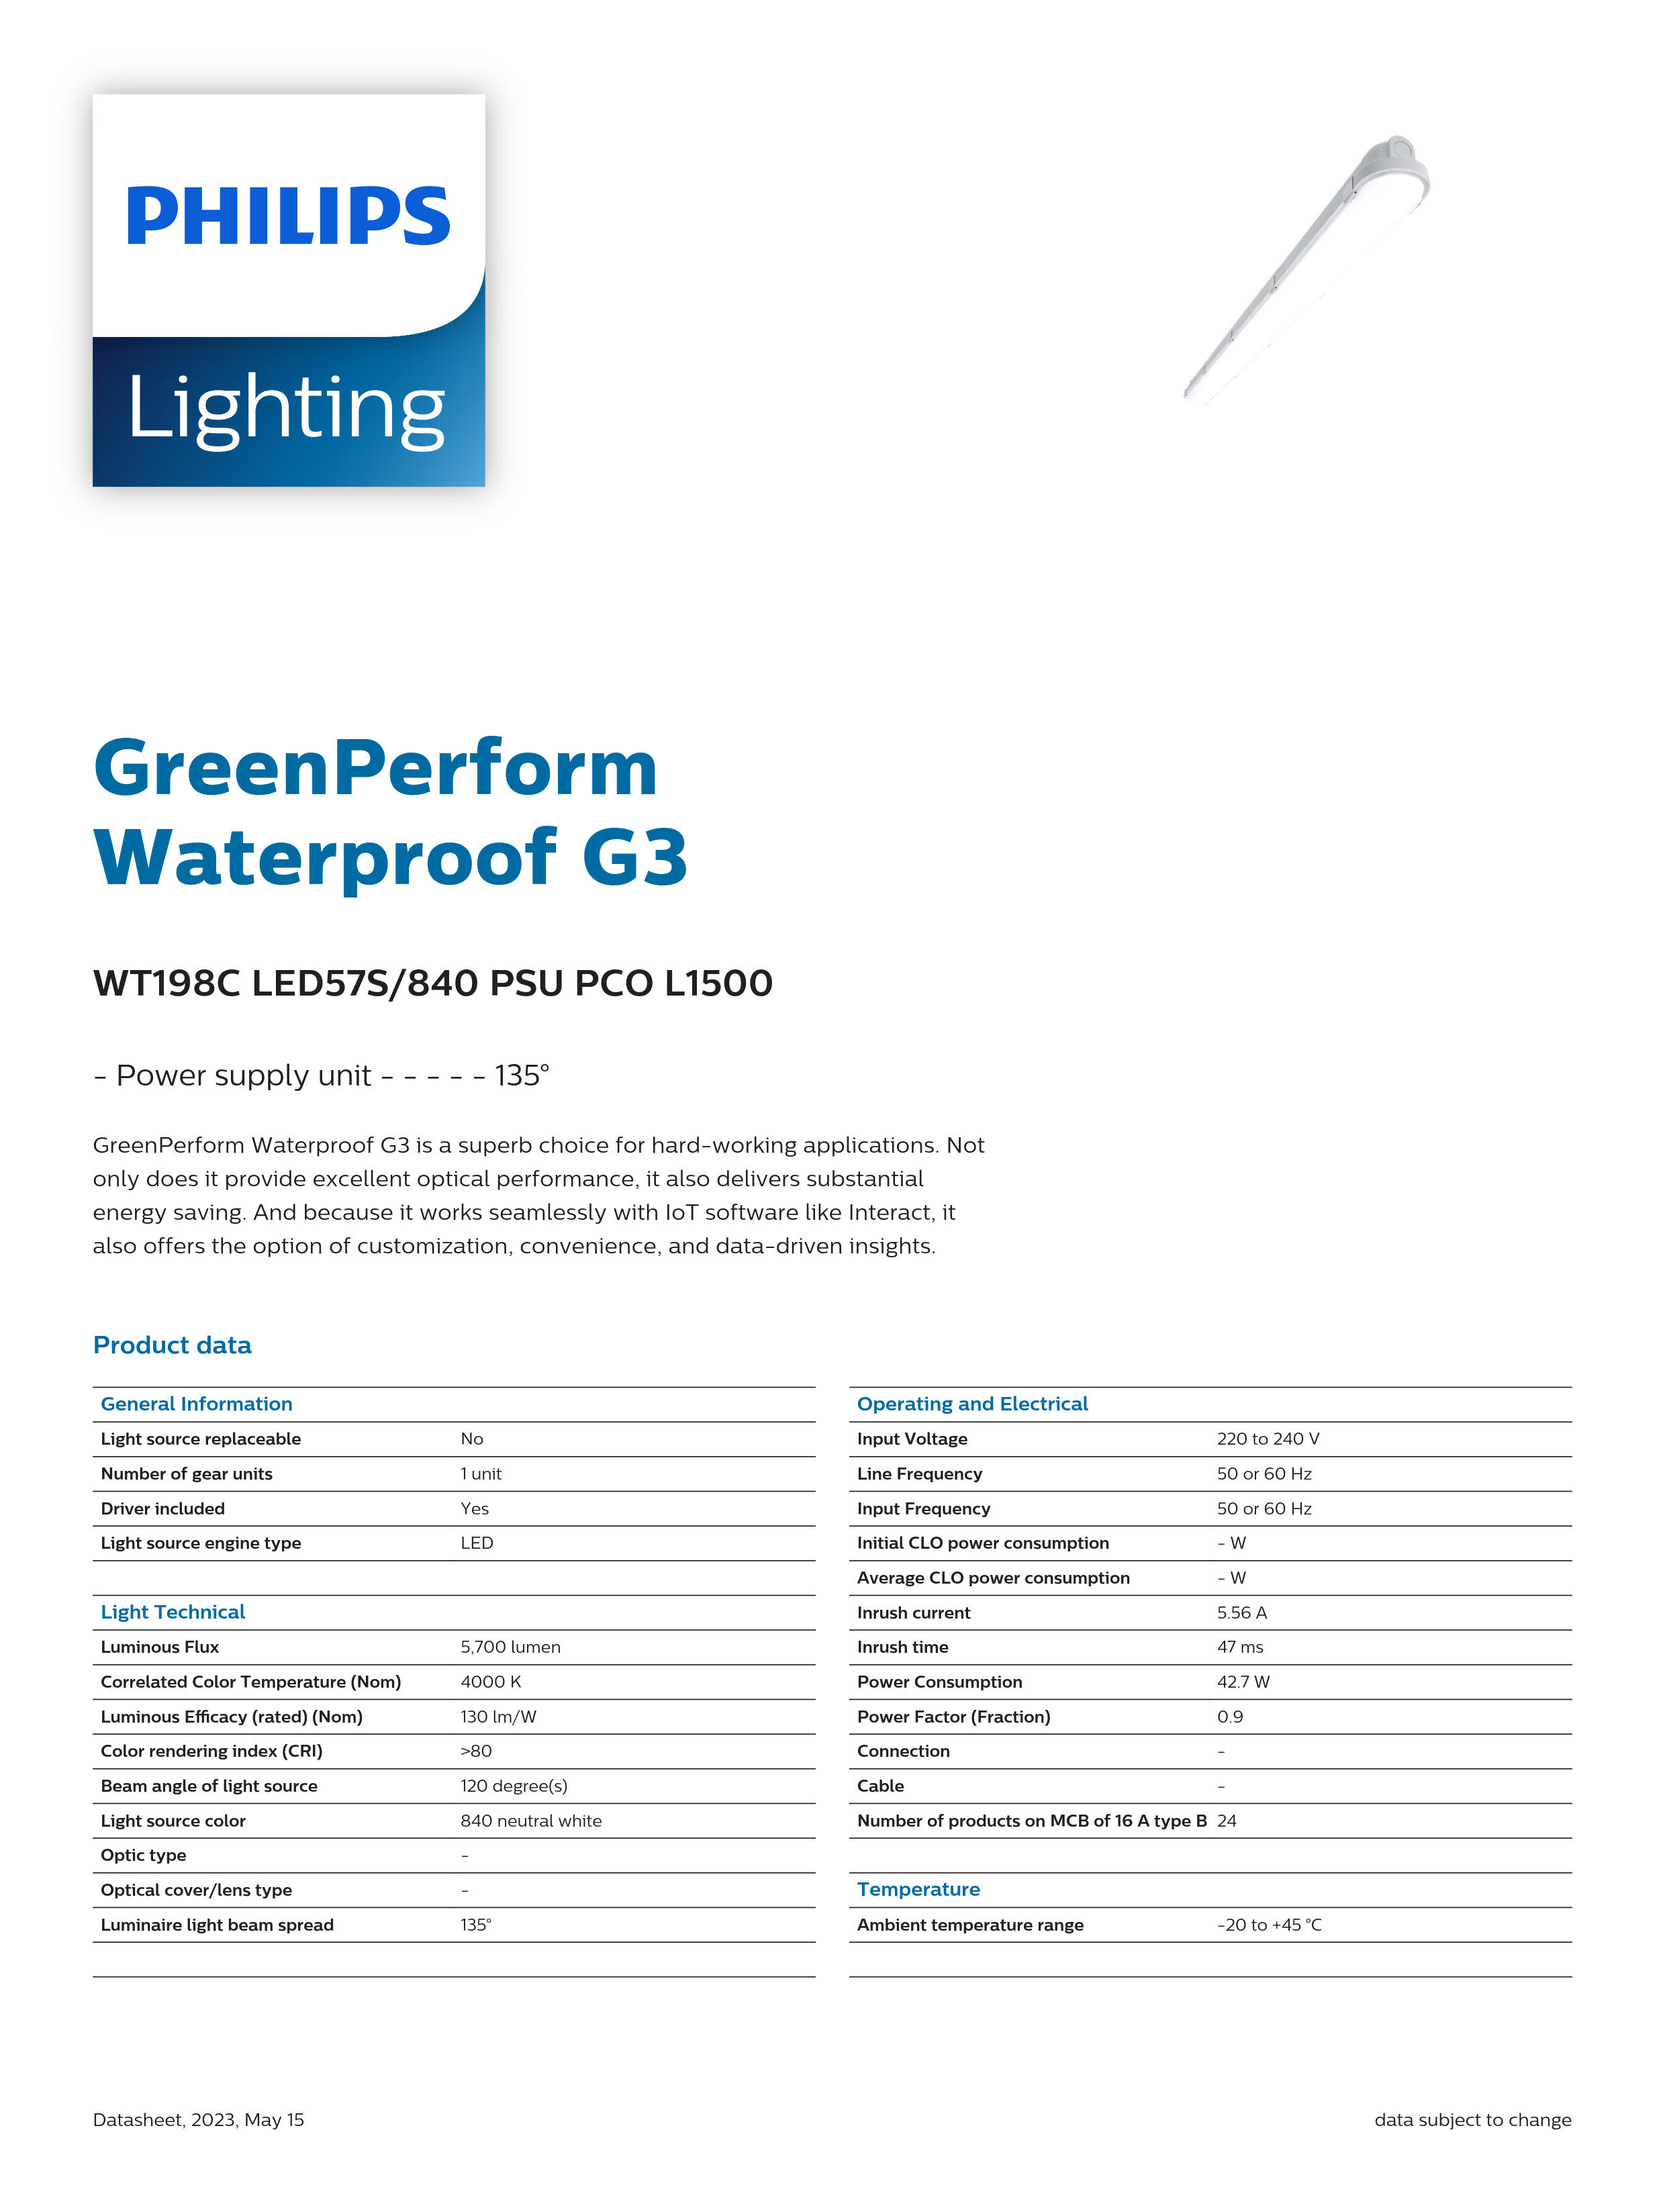 PHILIPS Waterproof WT198C LED57S/840 PSU PCO L1500 911401826480